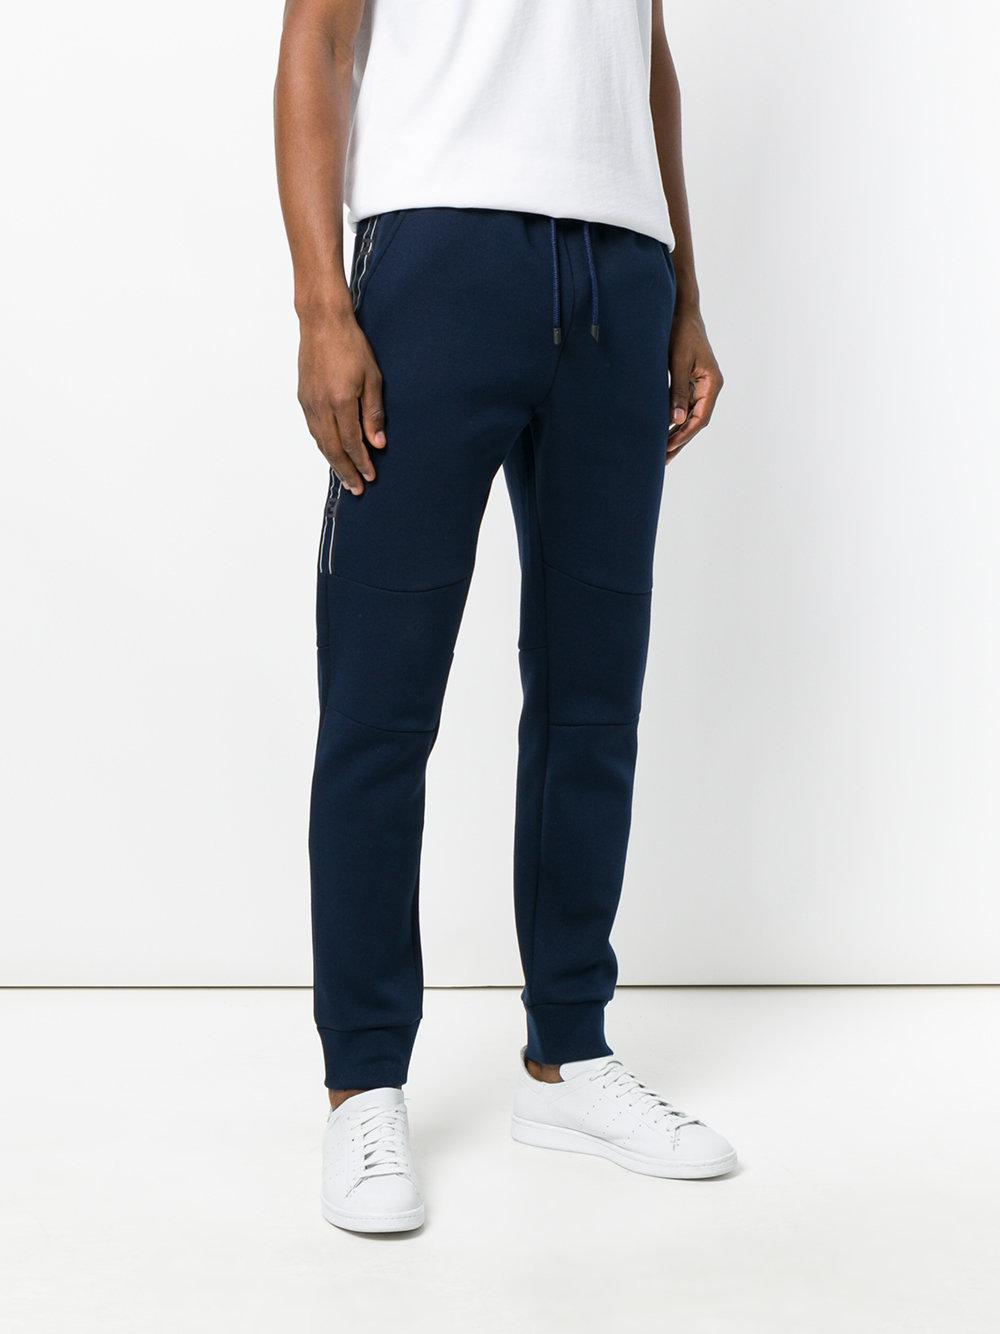 Fendi Cotton Classic Sweatpants in Blue for Men - Lyst